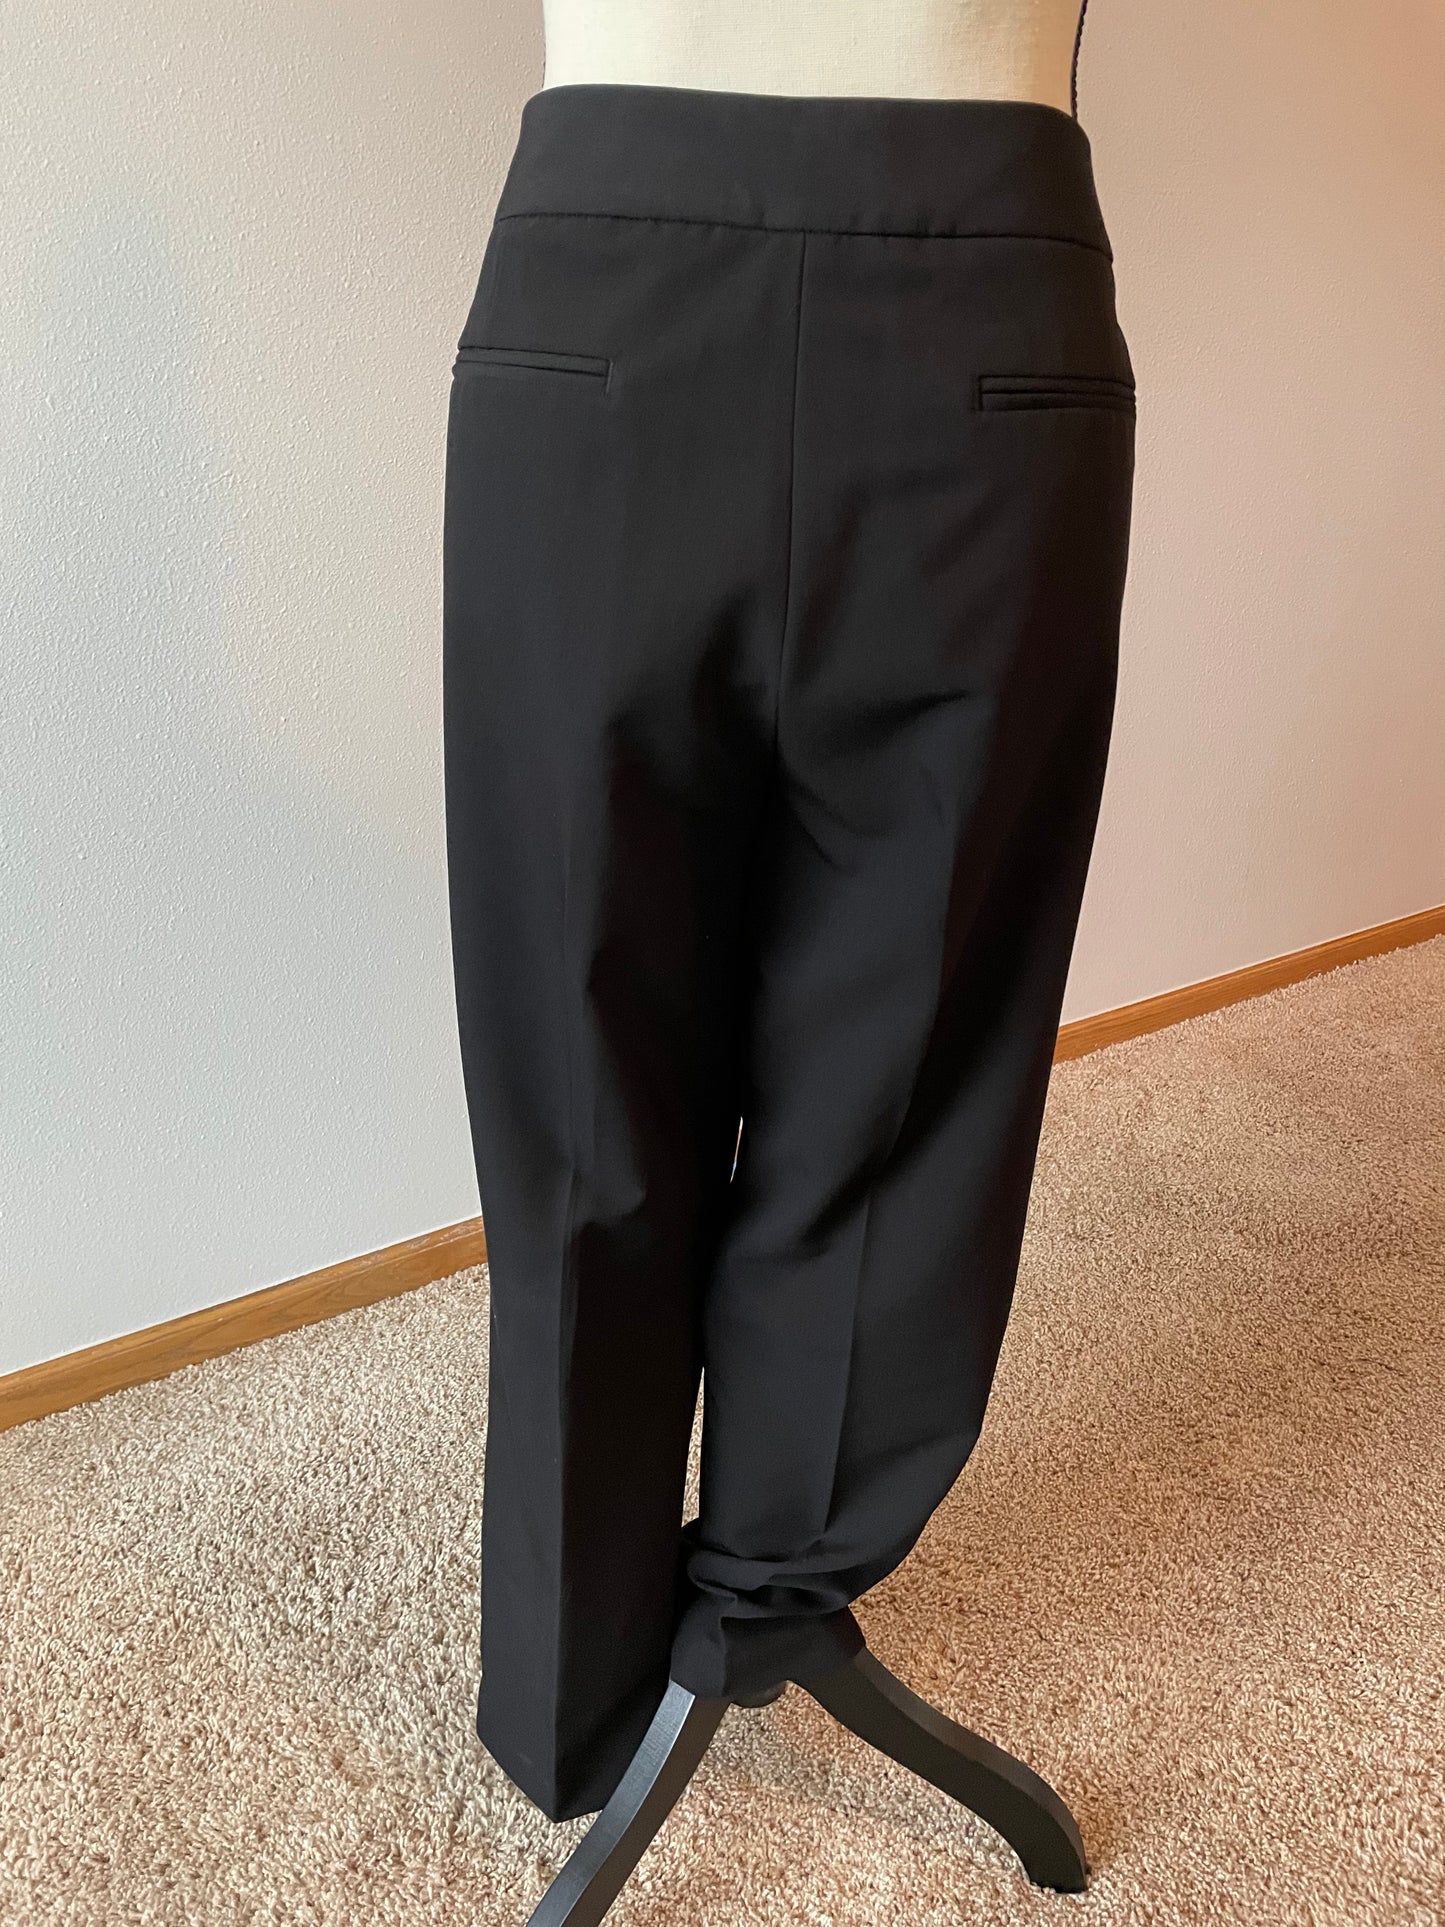 Worthington Pleated Ankle Length Dress Pants (14)